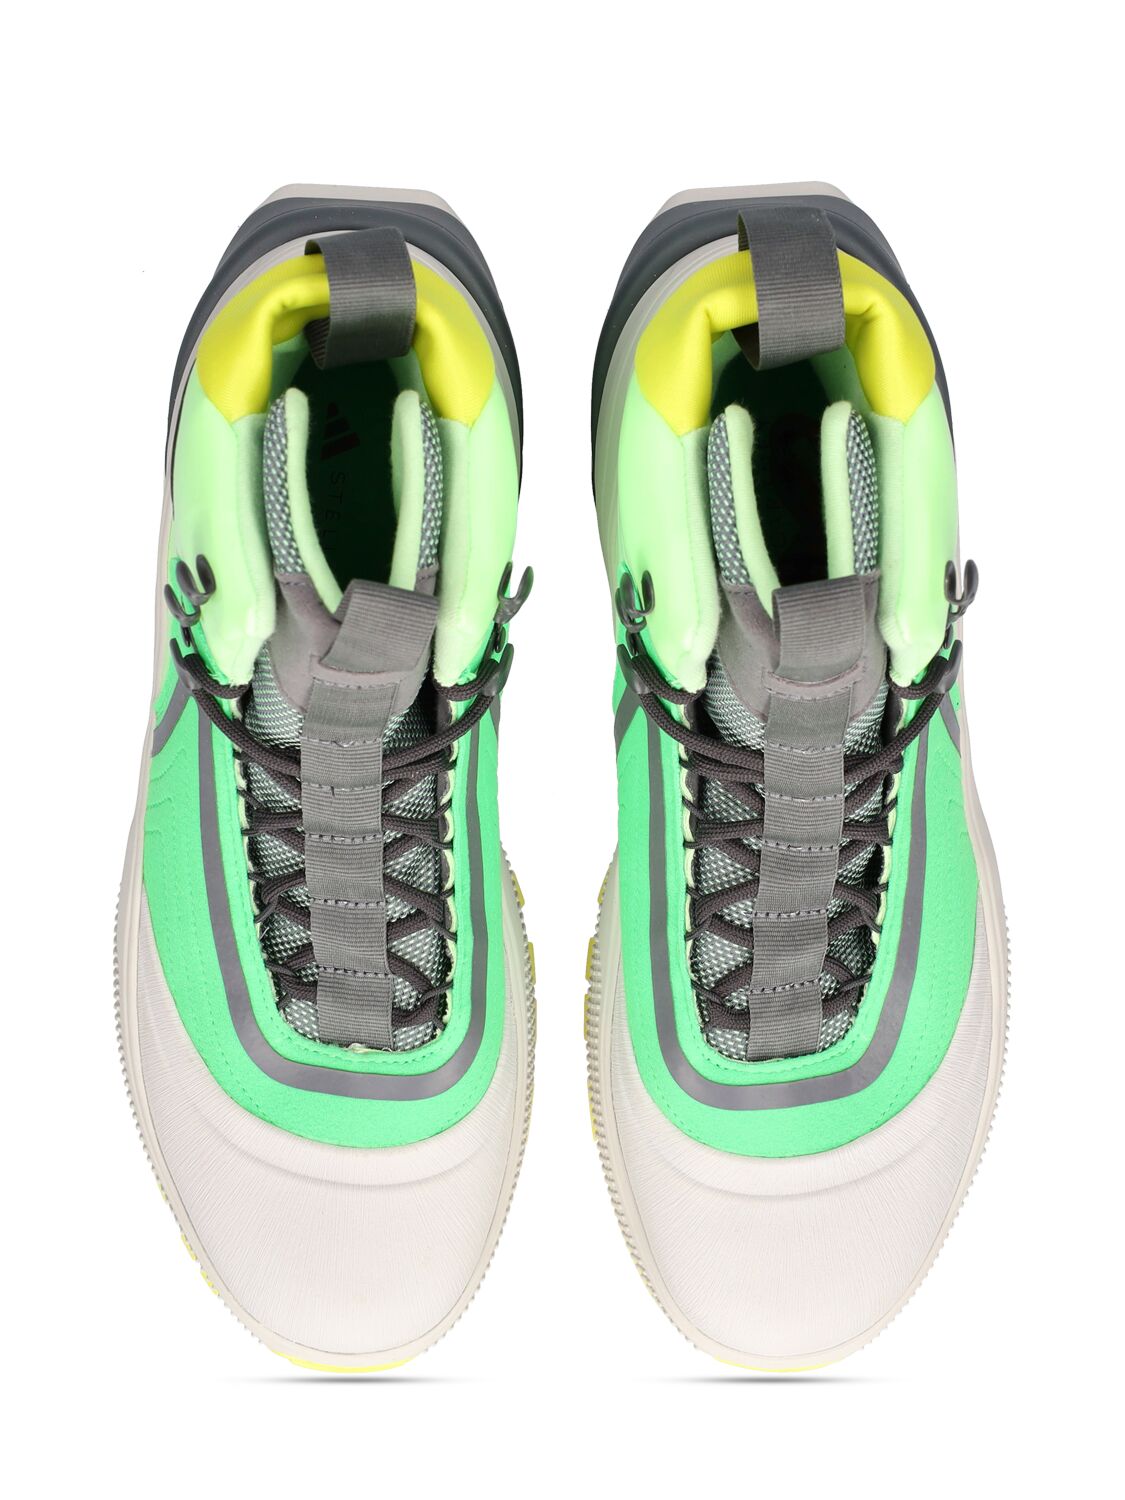 Shop Adidas By Stella Mccartney Terrex Hiking Boots In Solar Lime,green